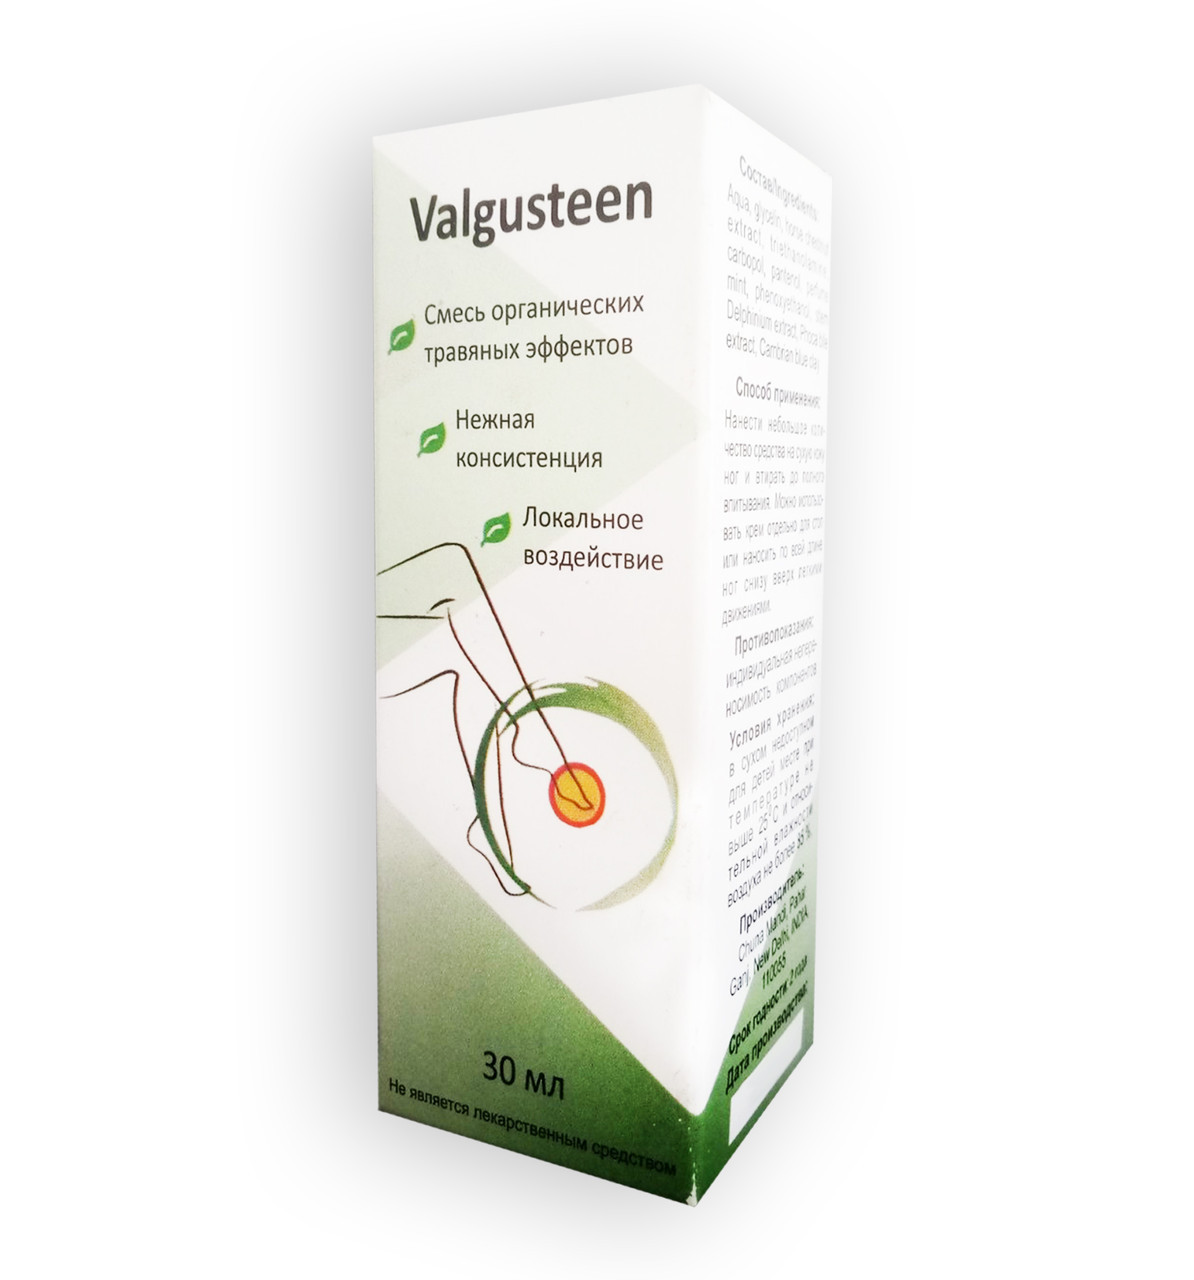 Valgusteen — Гель проти вальгусної деформації стопи (Вальгустин)